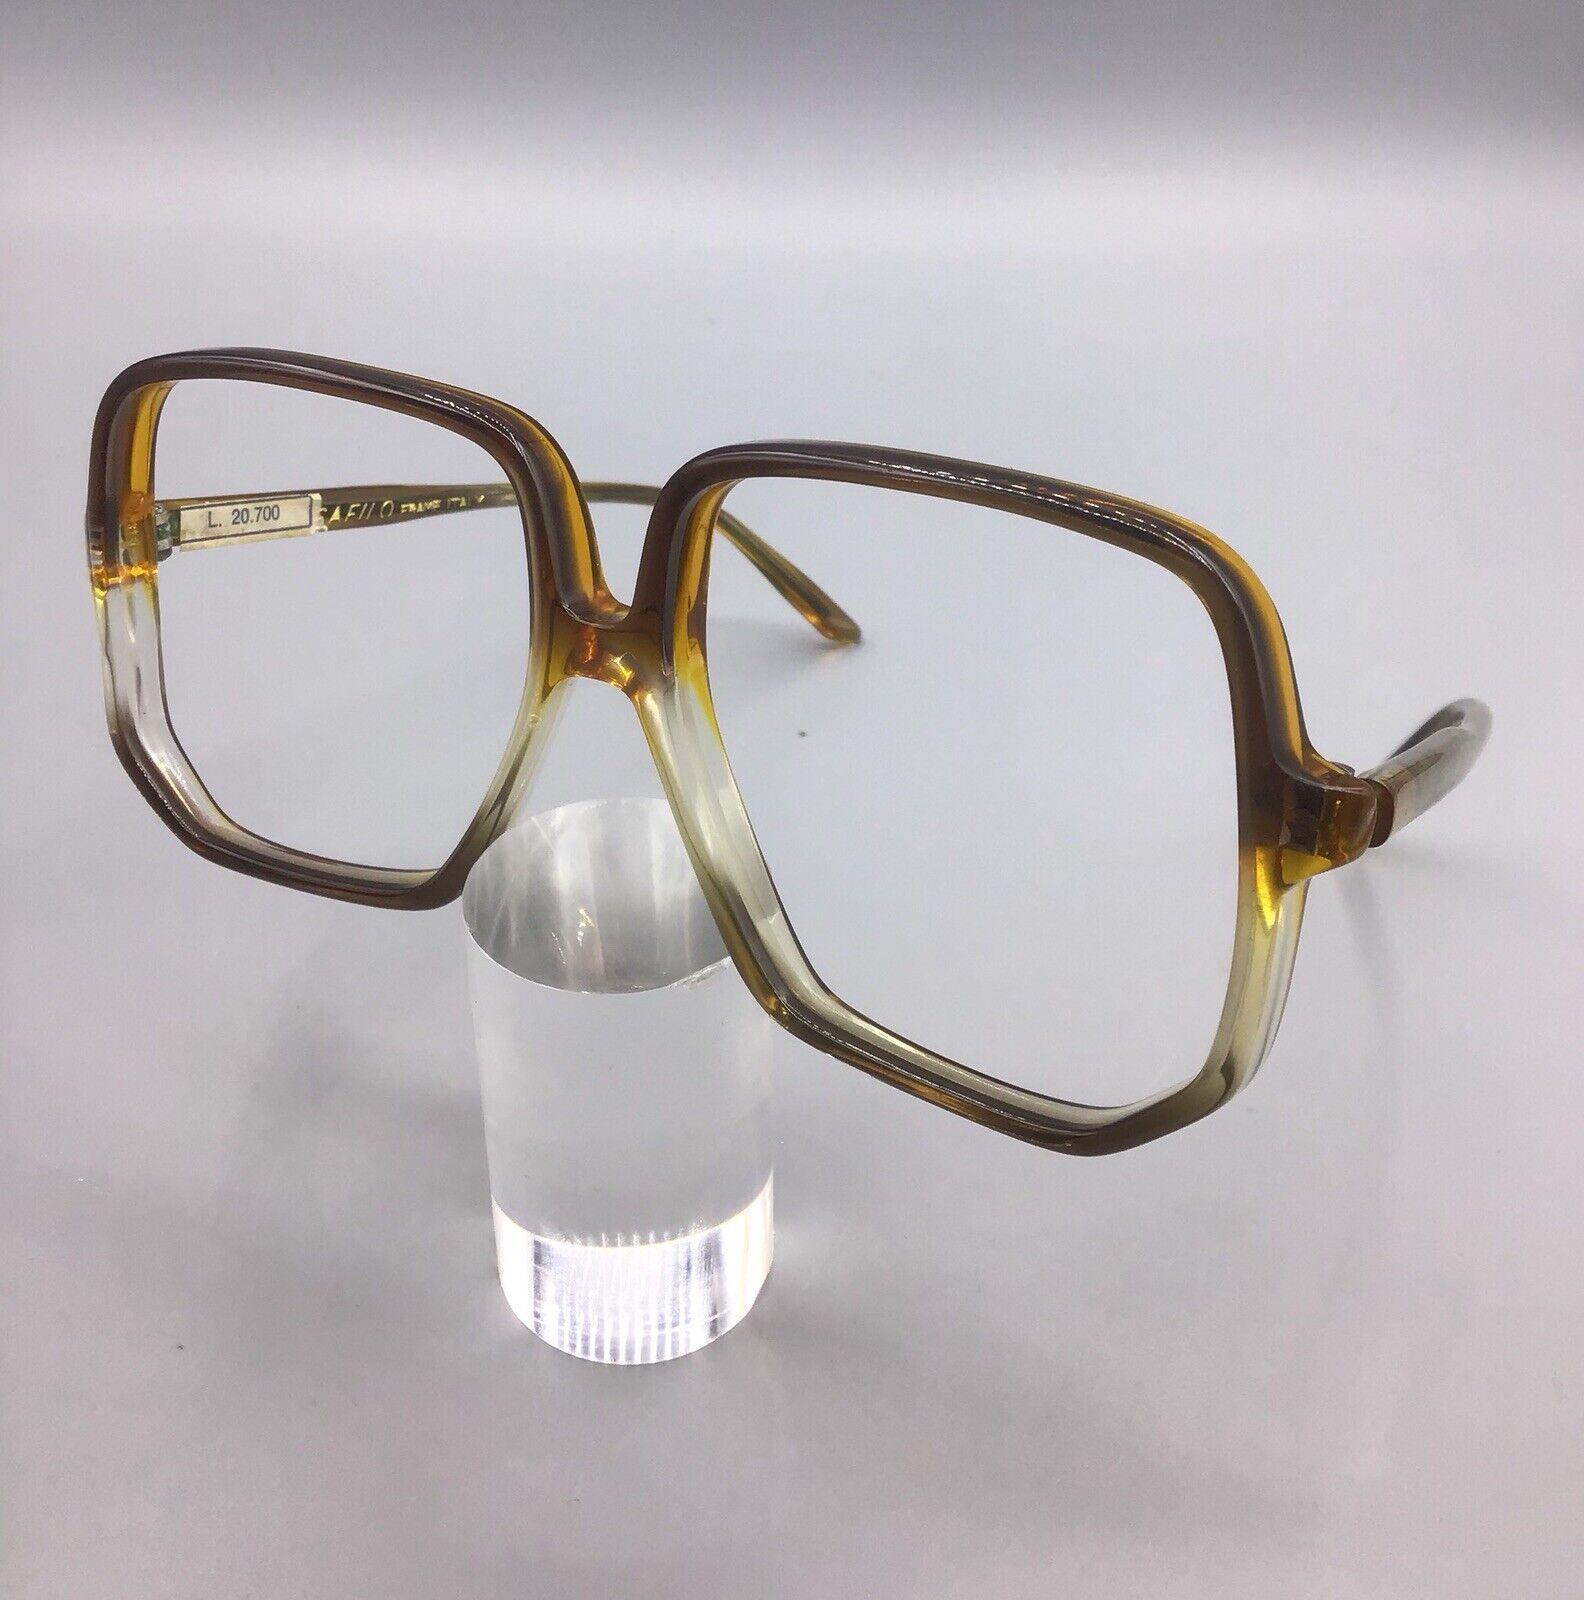 Safilo carmen 508 occhiale vintage eyewear brillen lunettes